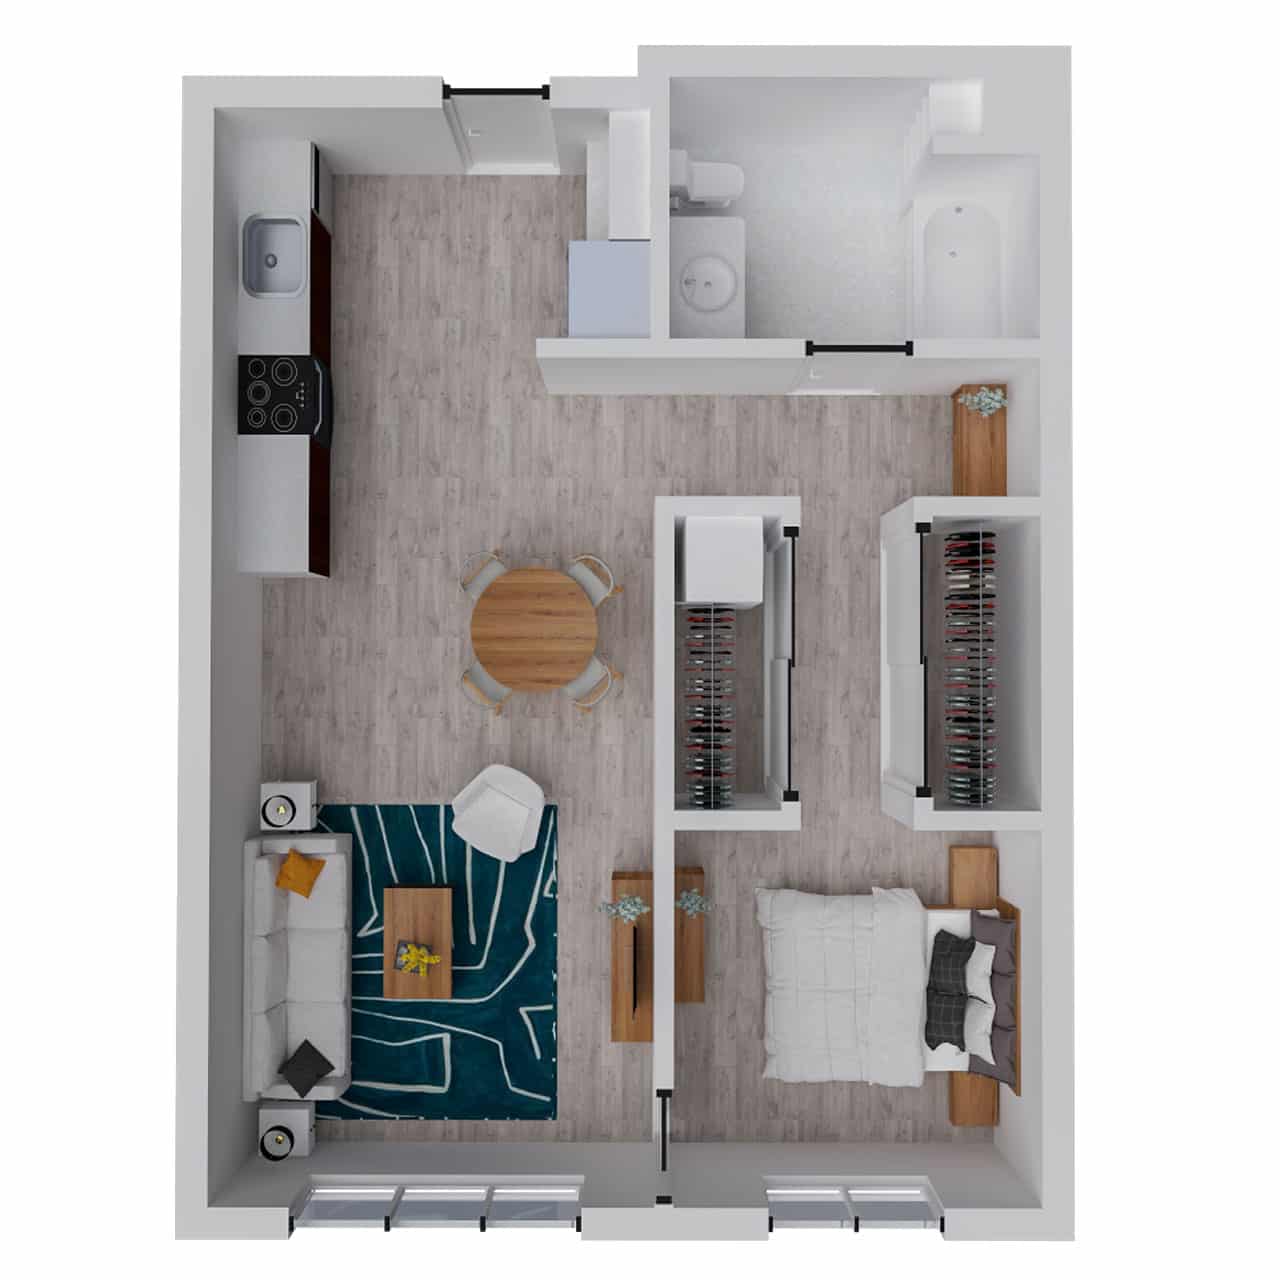 Attwell, A11 floor plan, one bedroom, one bath.